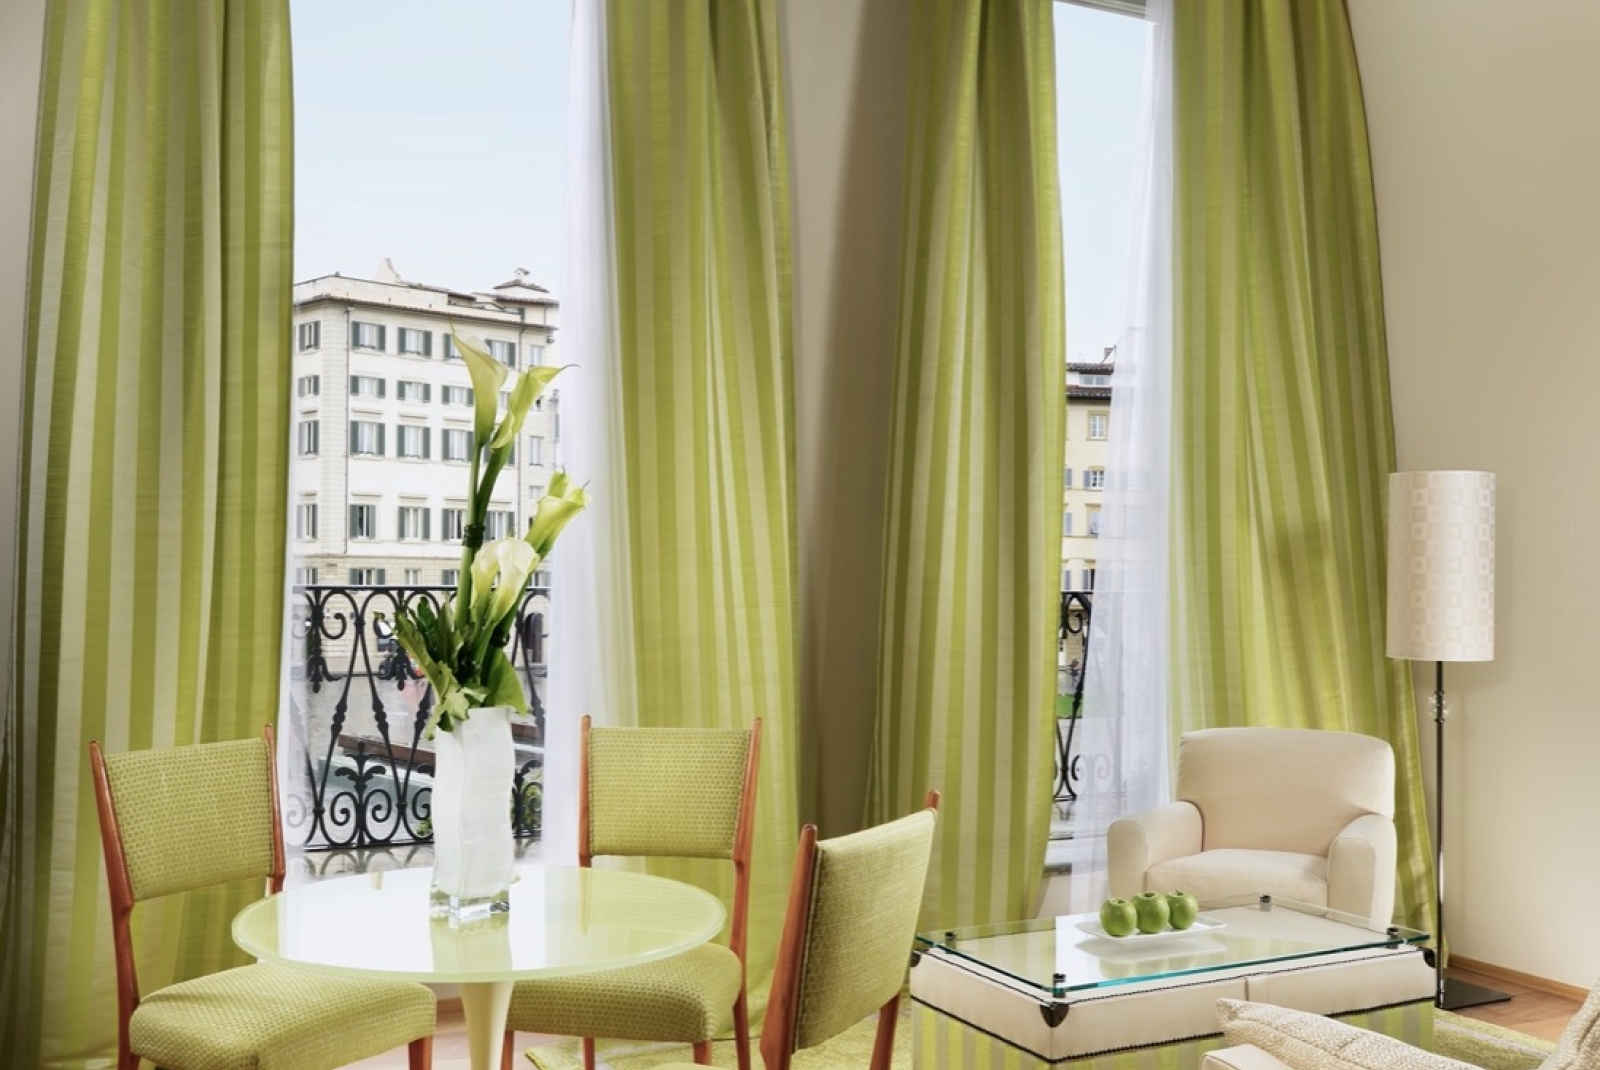 Grand Hotel Minerva - Firenze